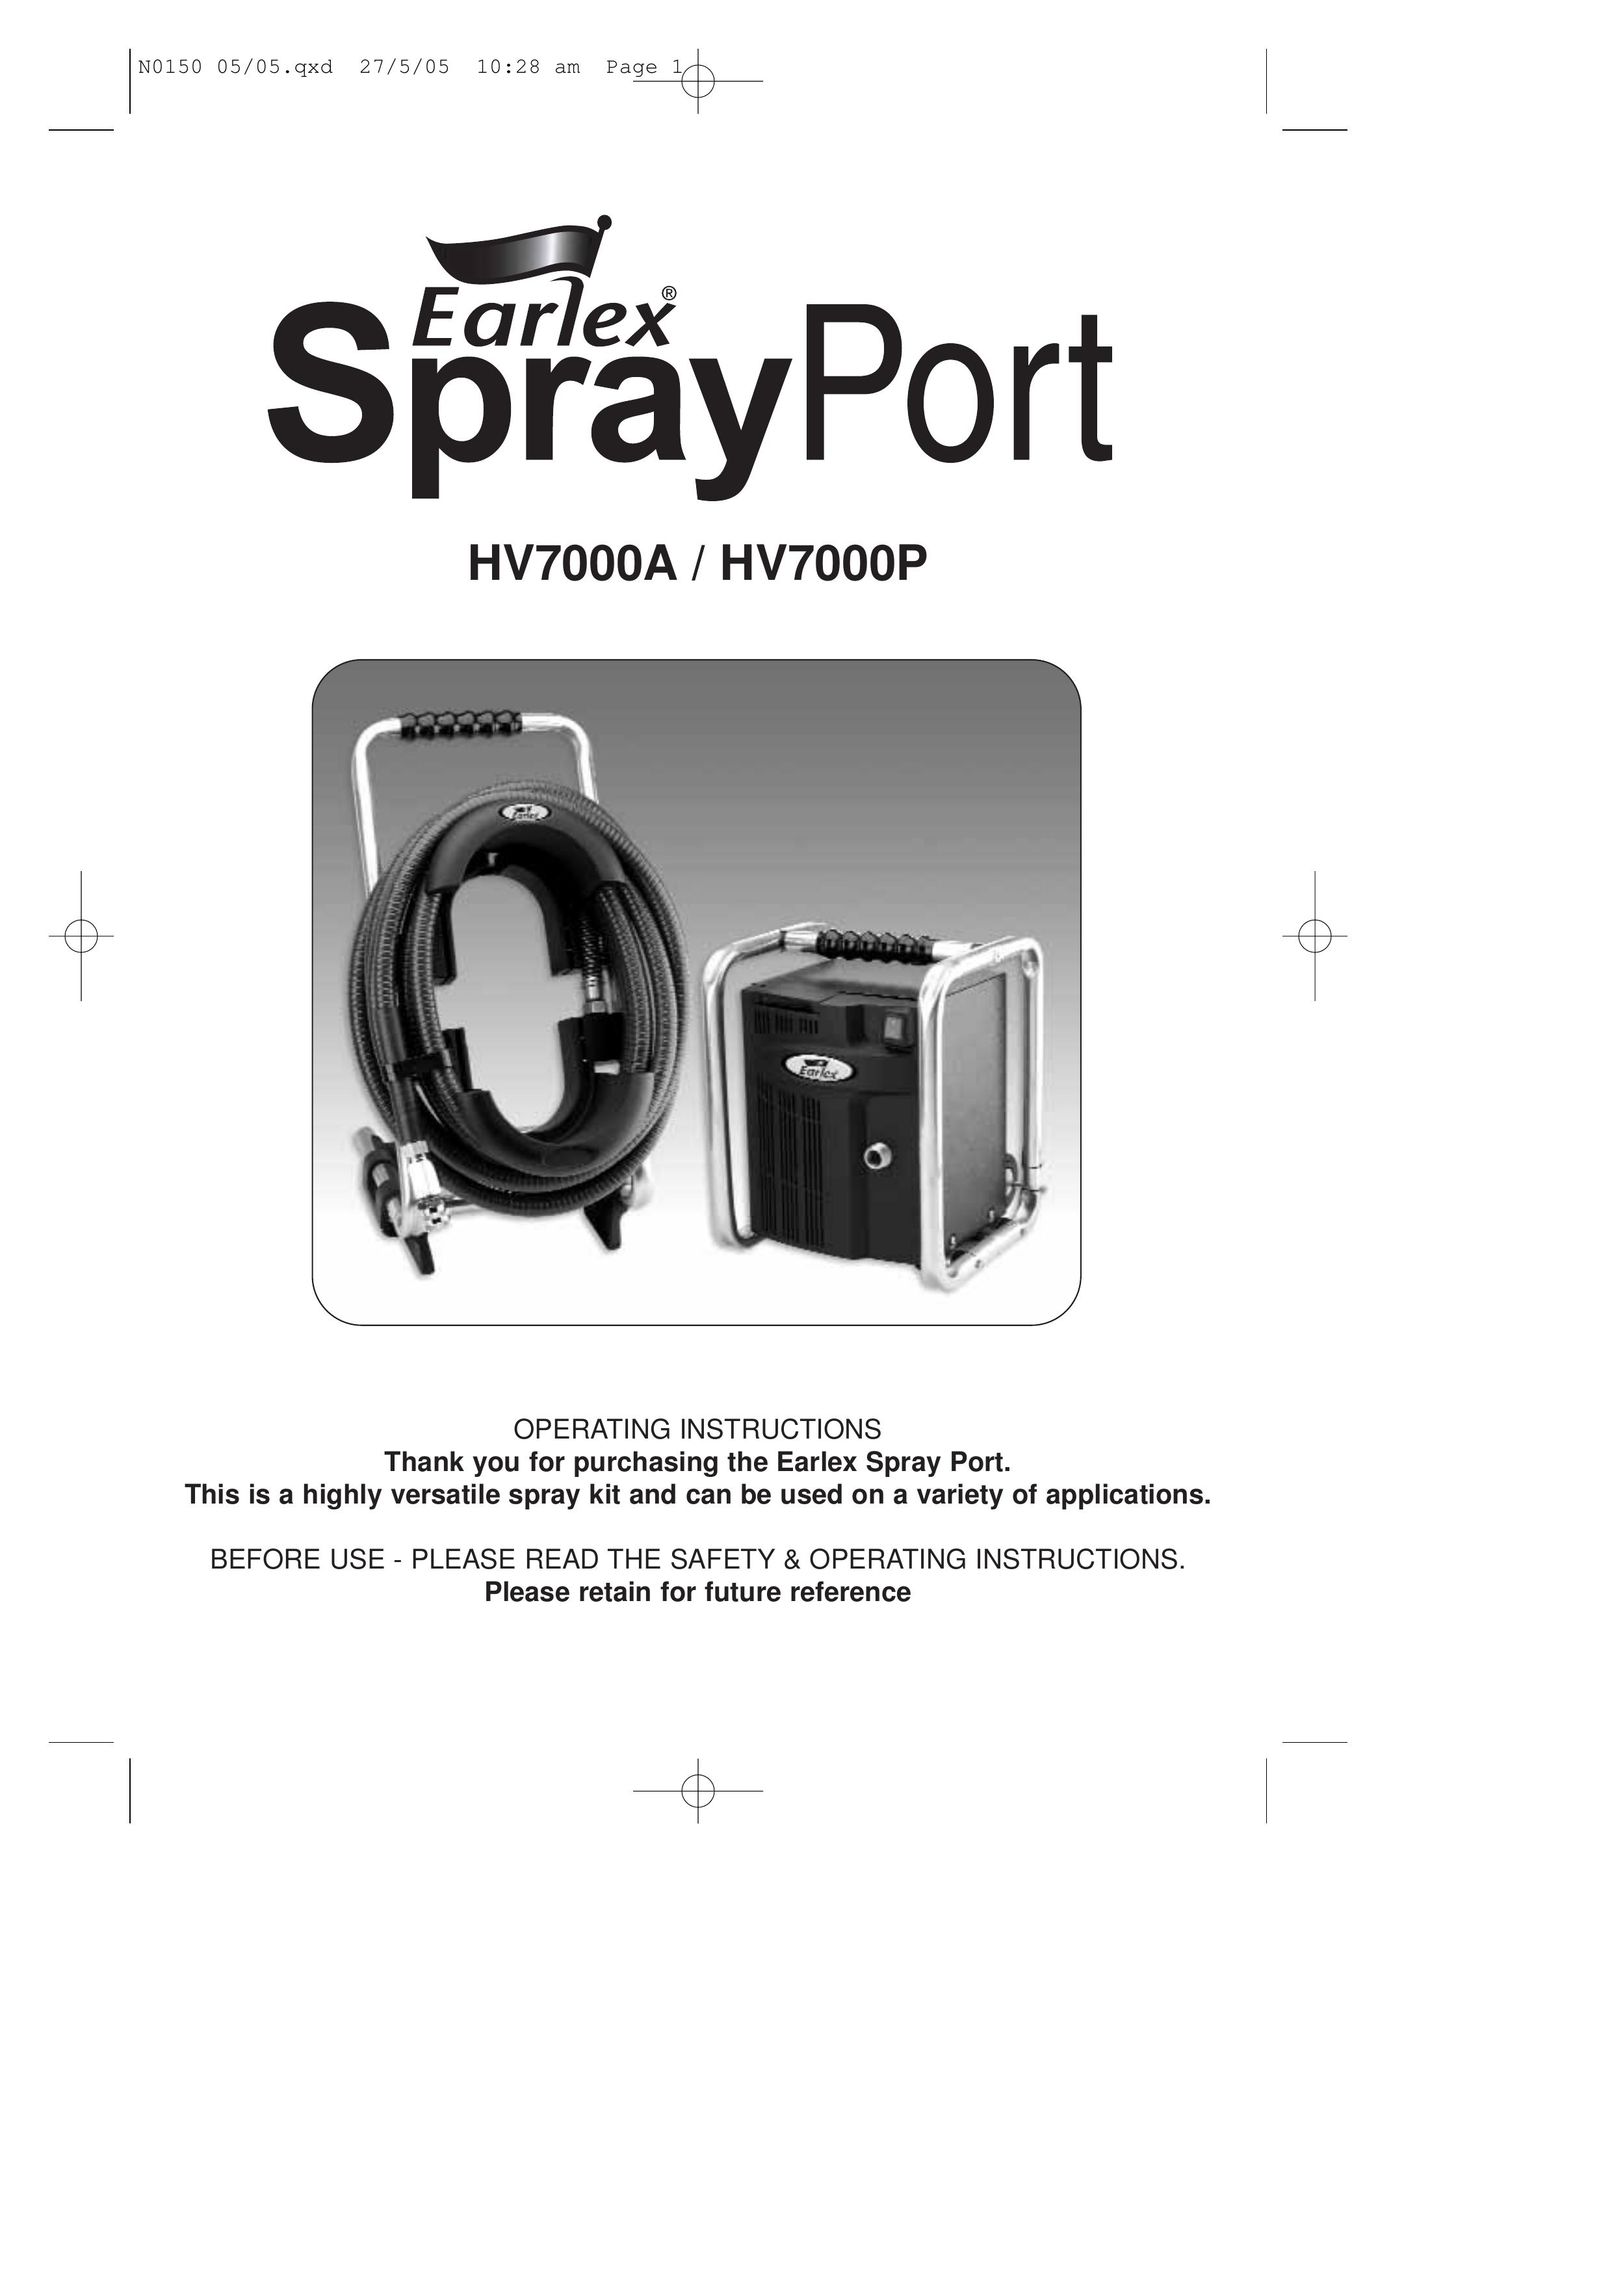 Earlex HV7000P Paint Sprayer User Manual